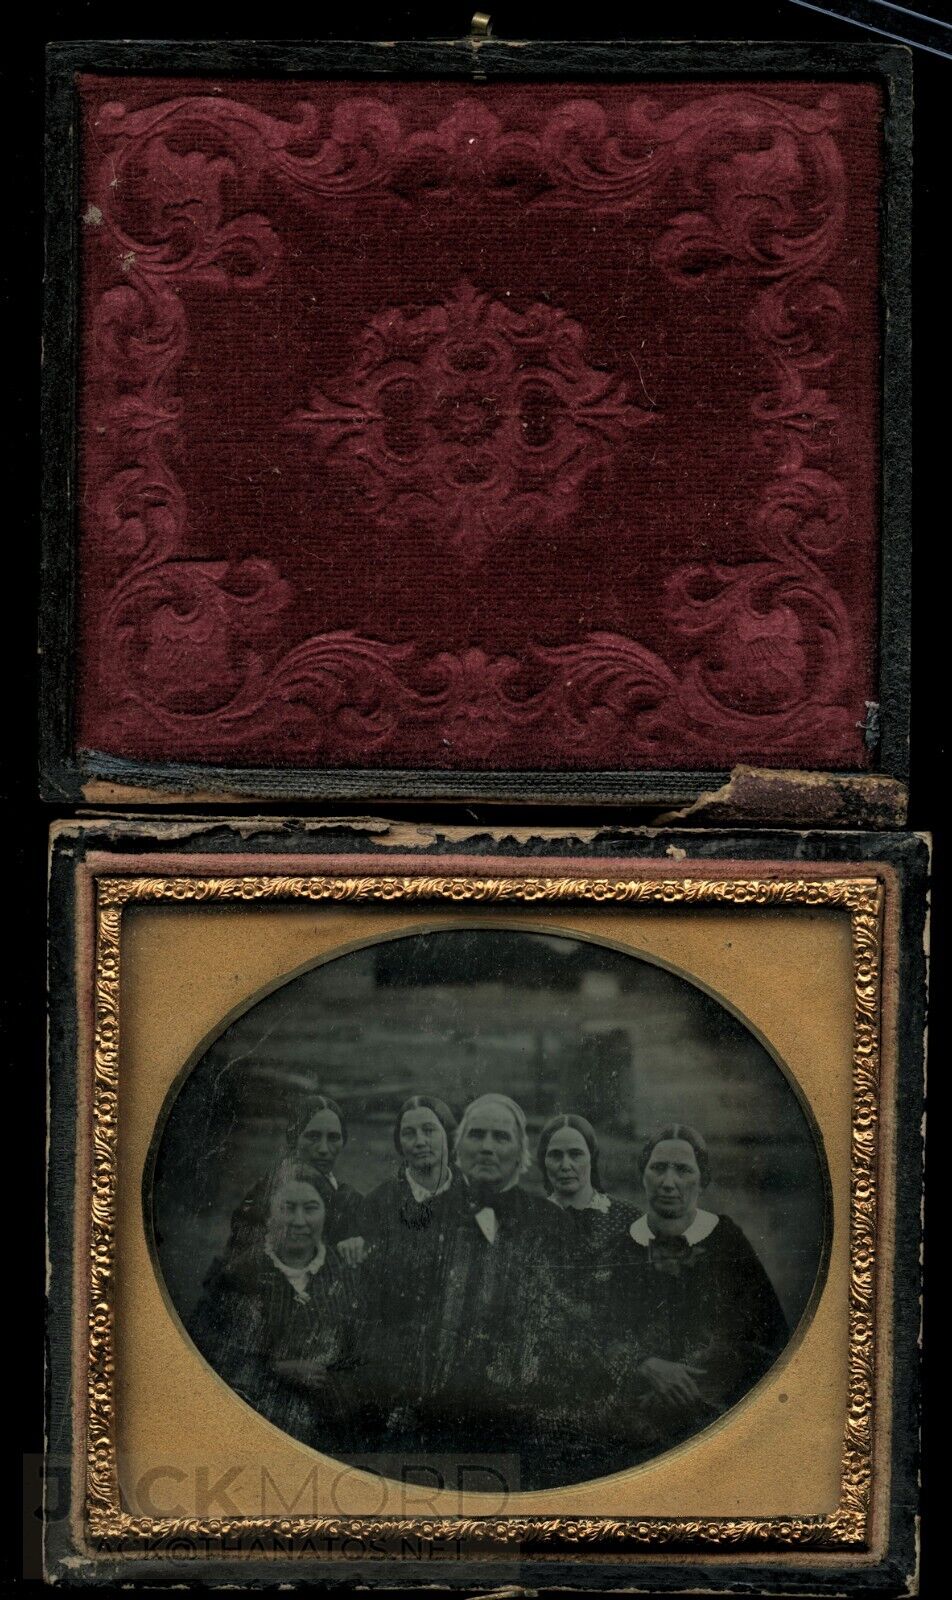 1850S AMBROTYPE PHOTO 1/6 OUTDOOR MORMON PLURAL MARRIAGE?